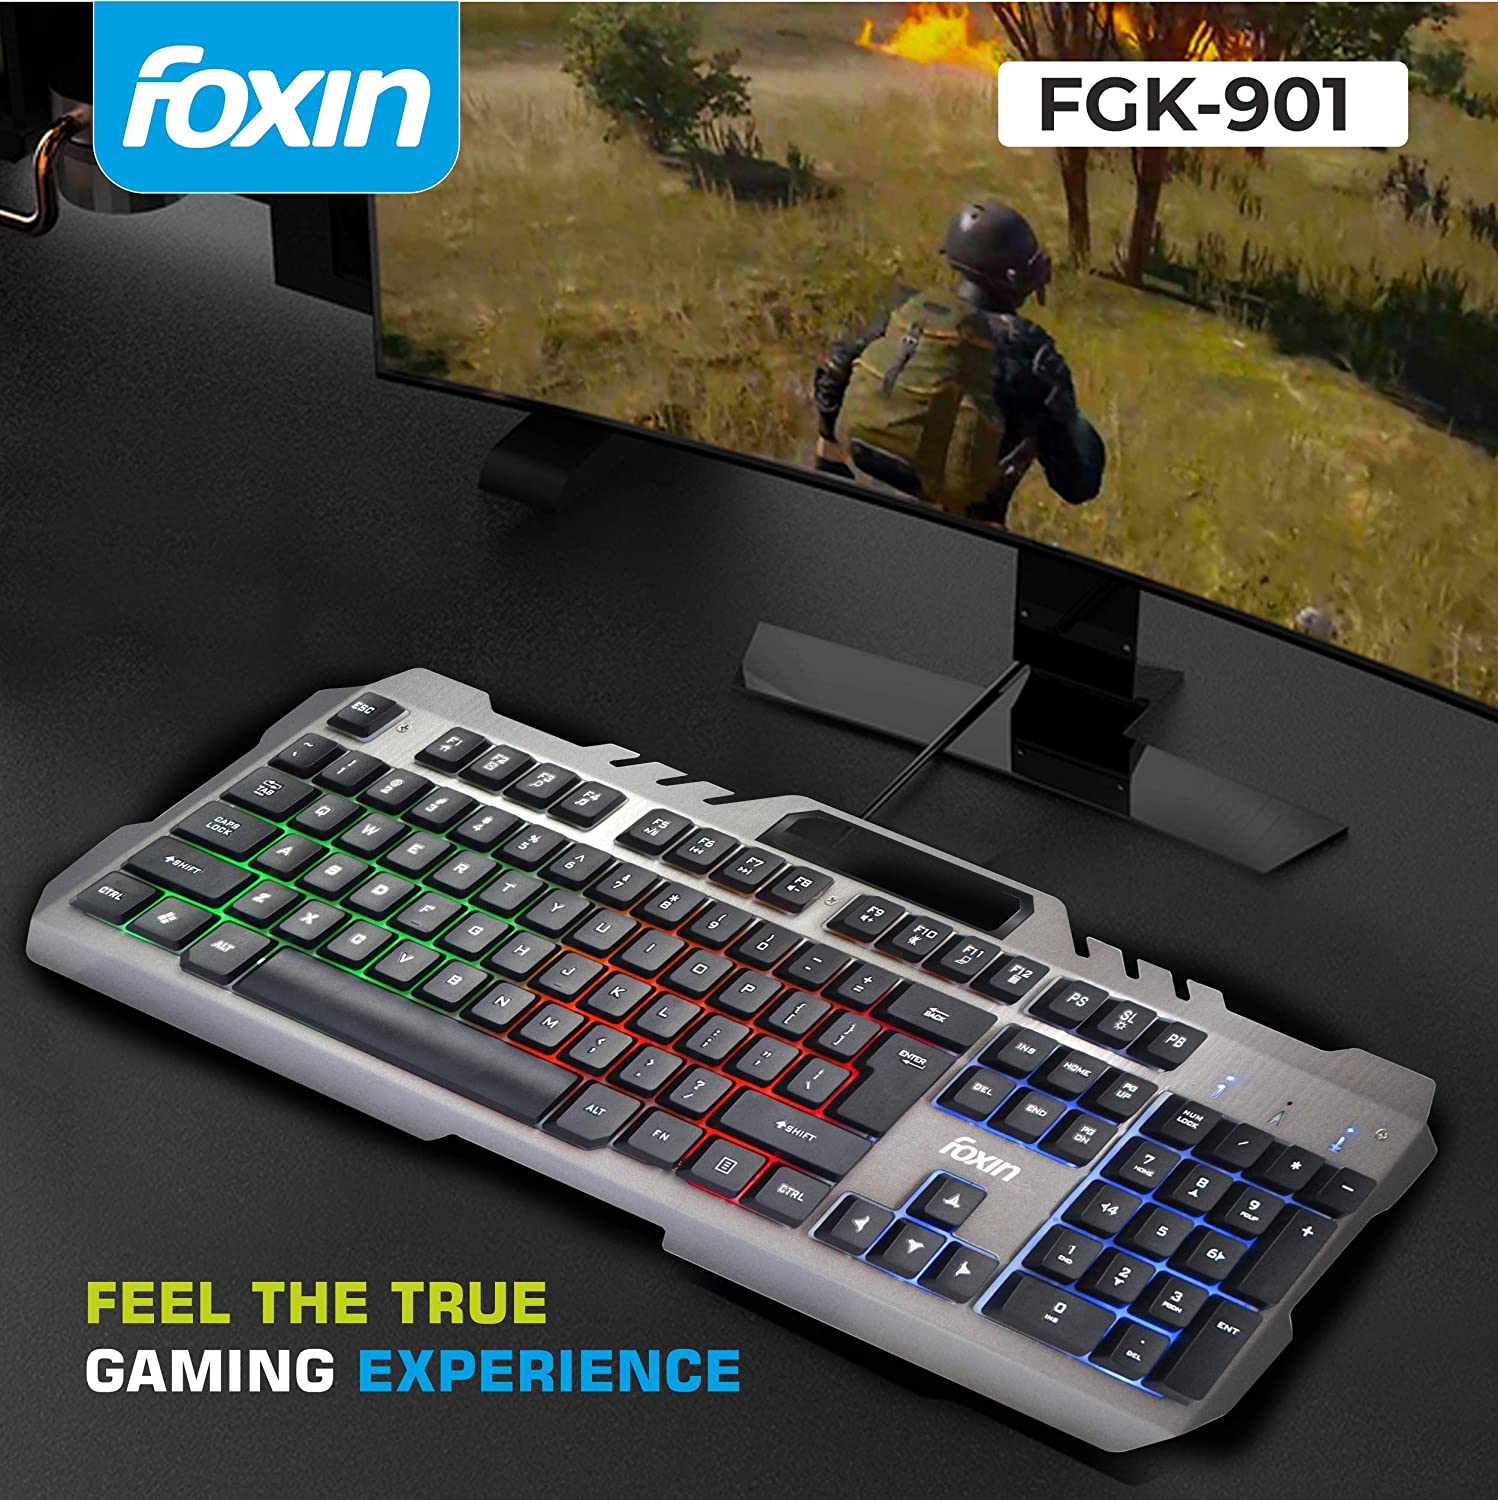 Foxin FGK-901 RGB Backlit Gaming Keyboard (Black)